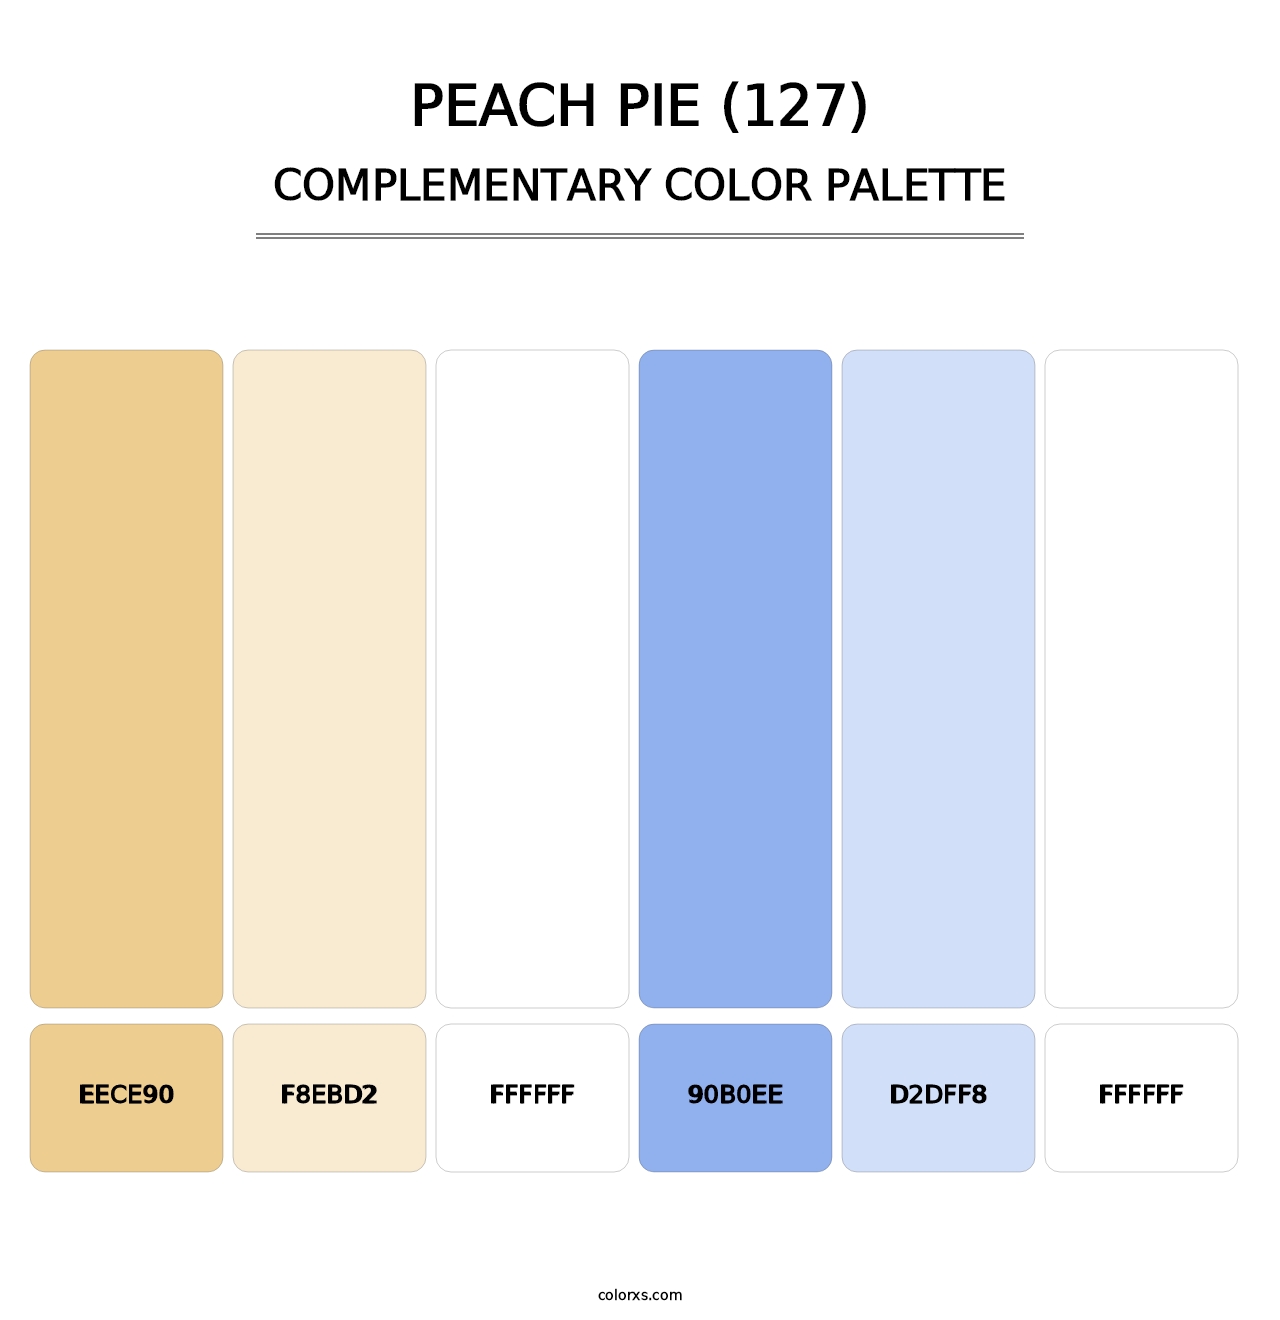 Peach Pie (127) - Complementary Color Palette